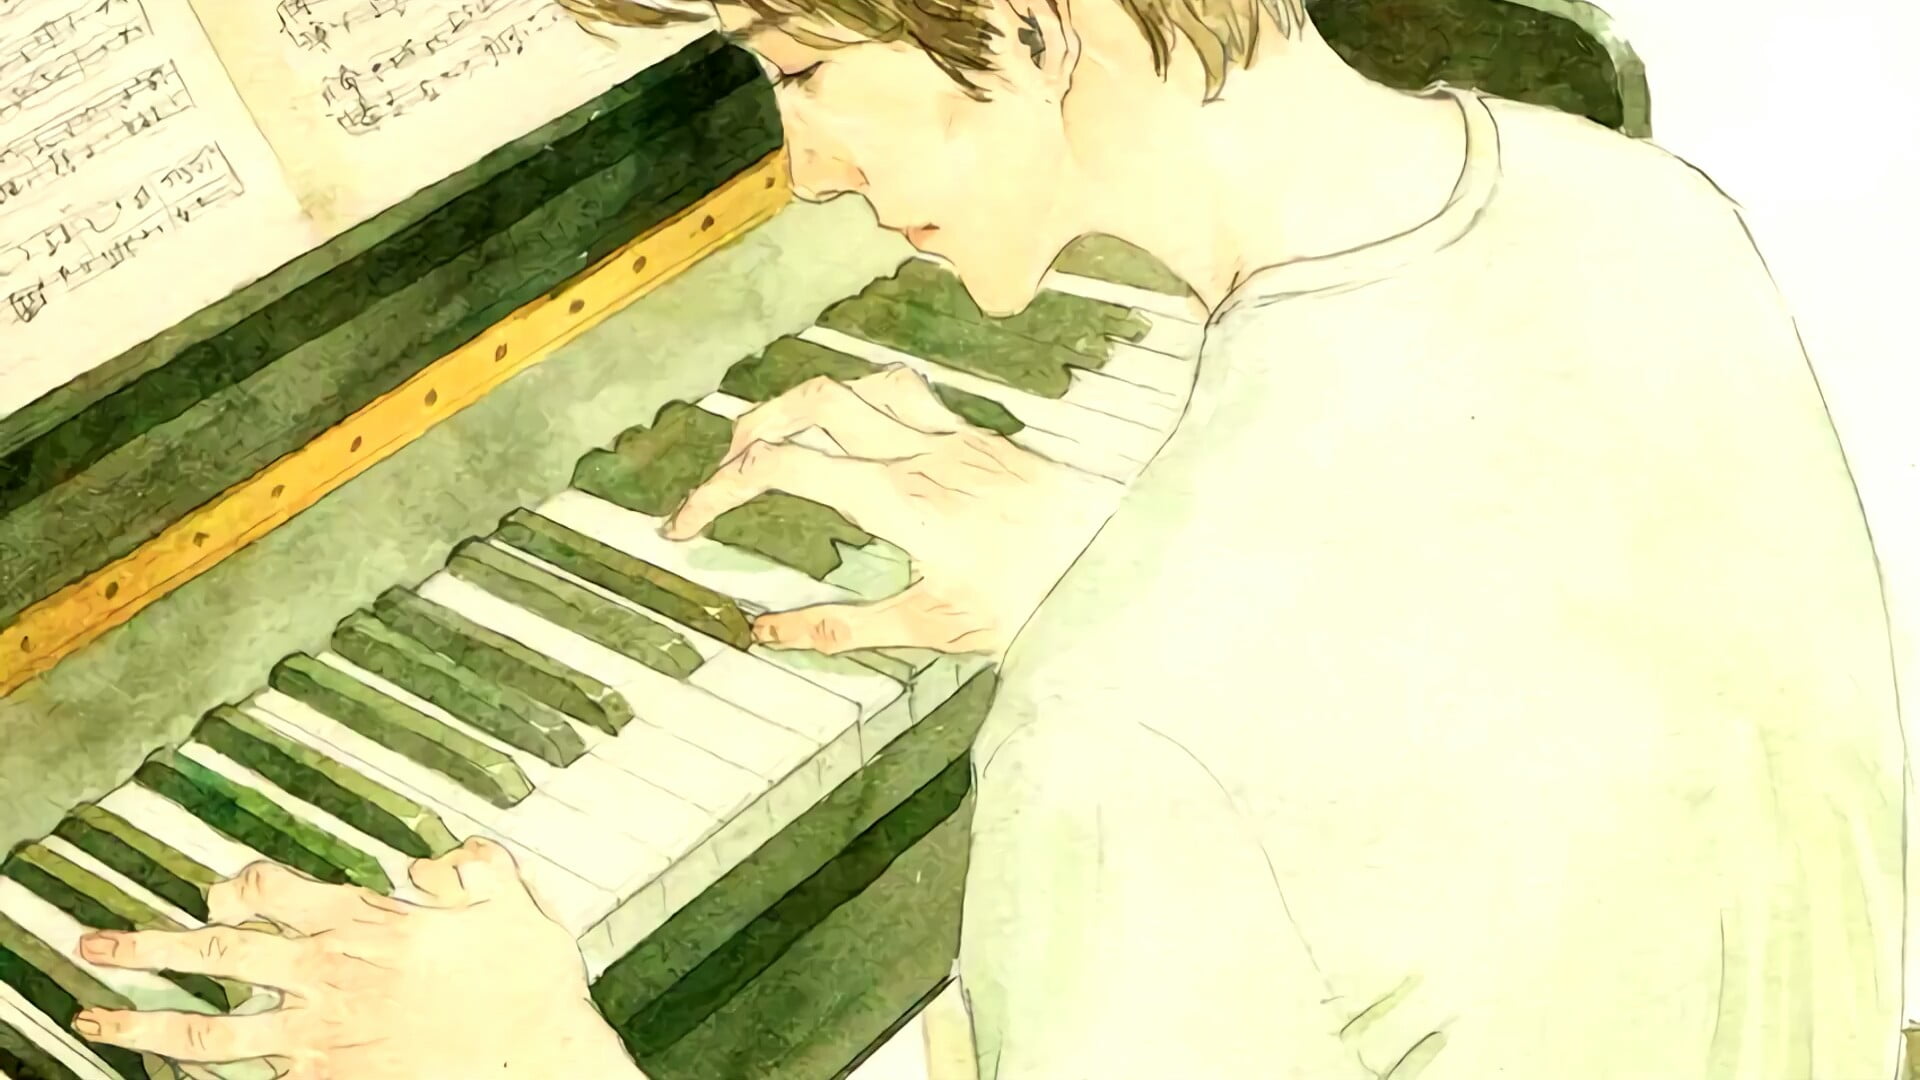 piano, anime boy, anime guy, anime art, music sheet, play, one person